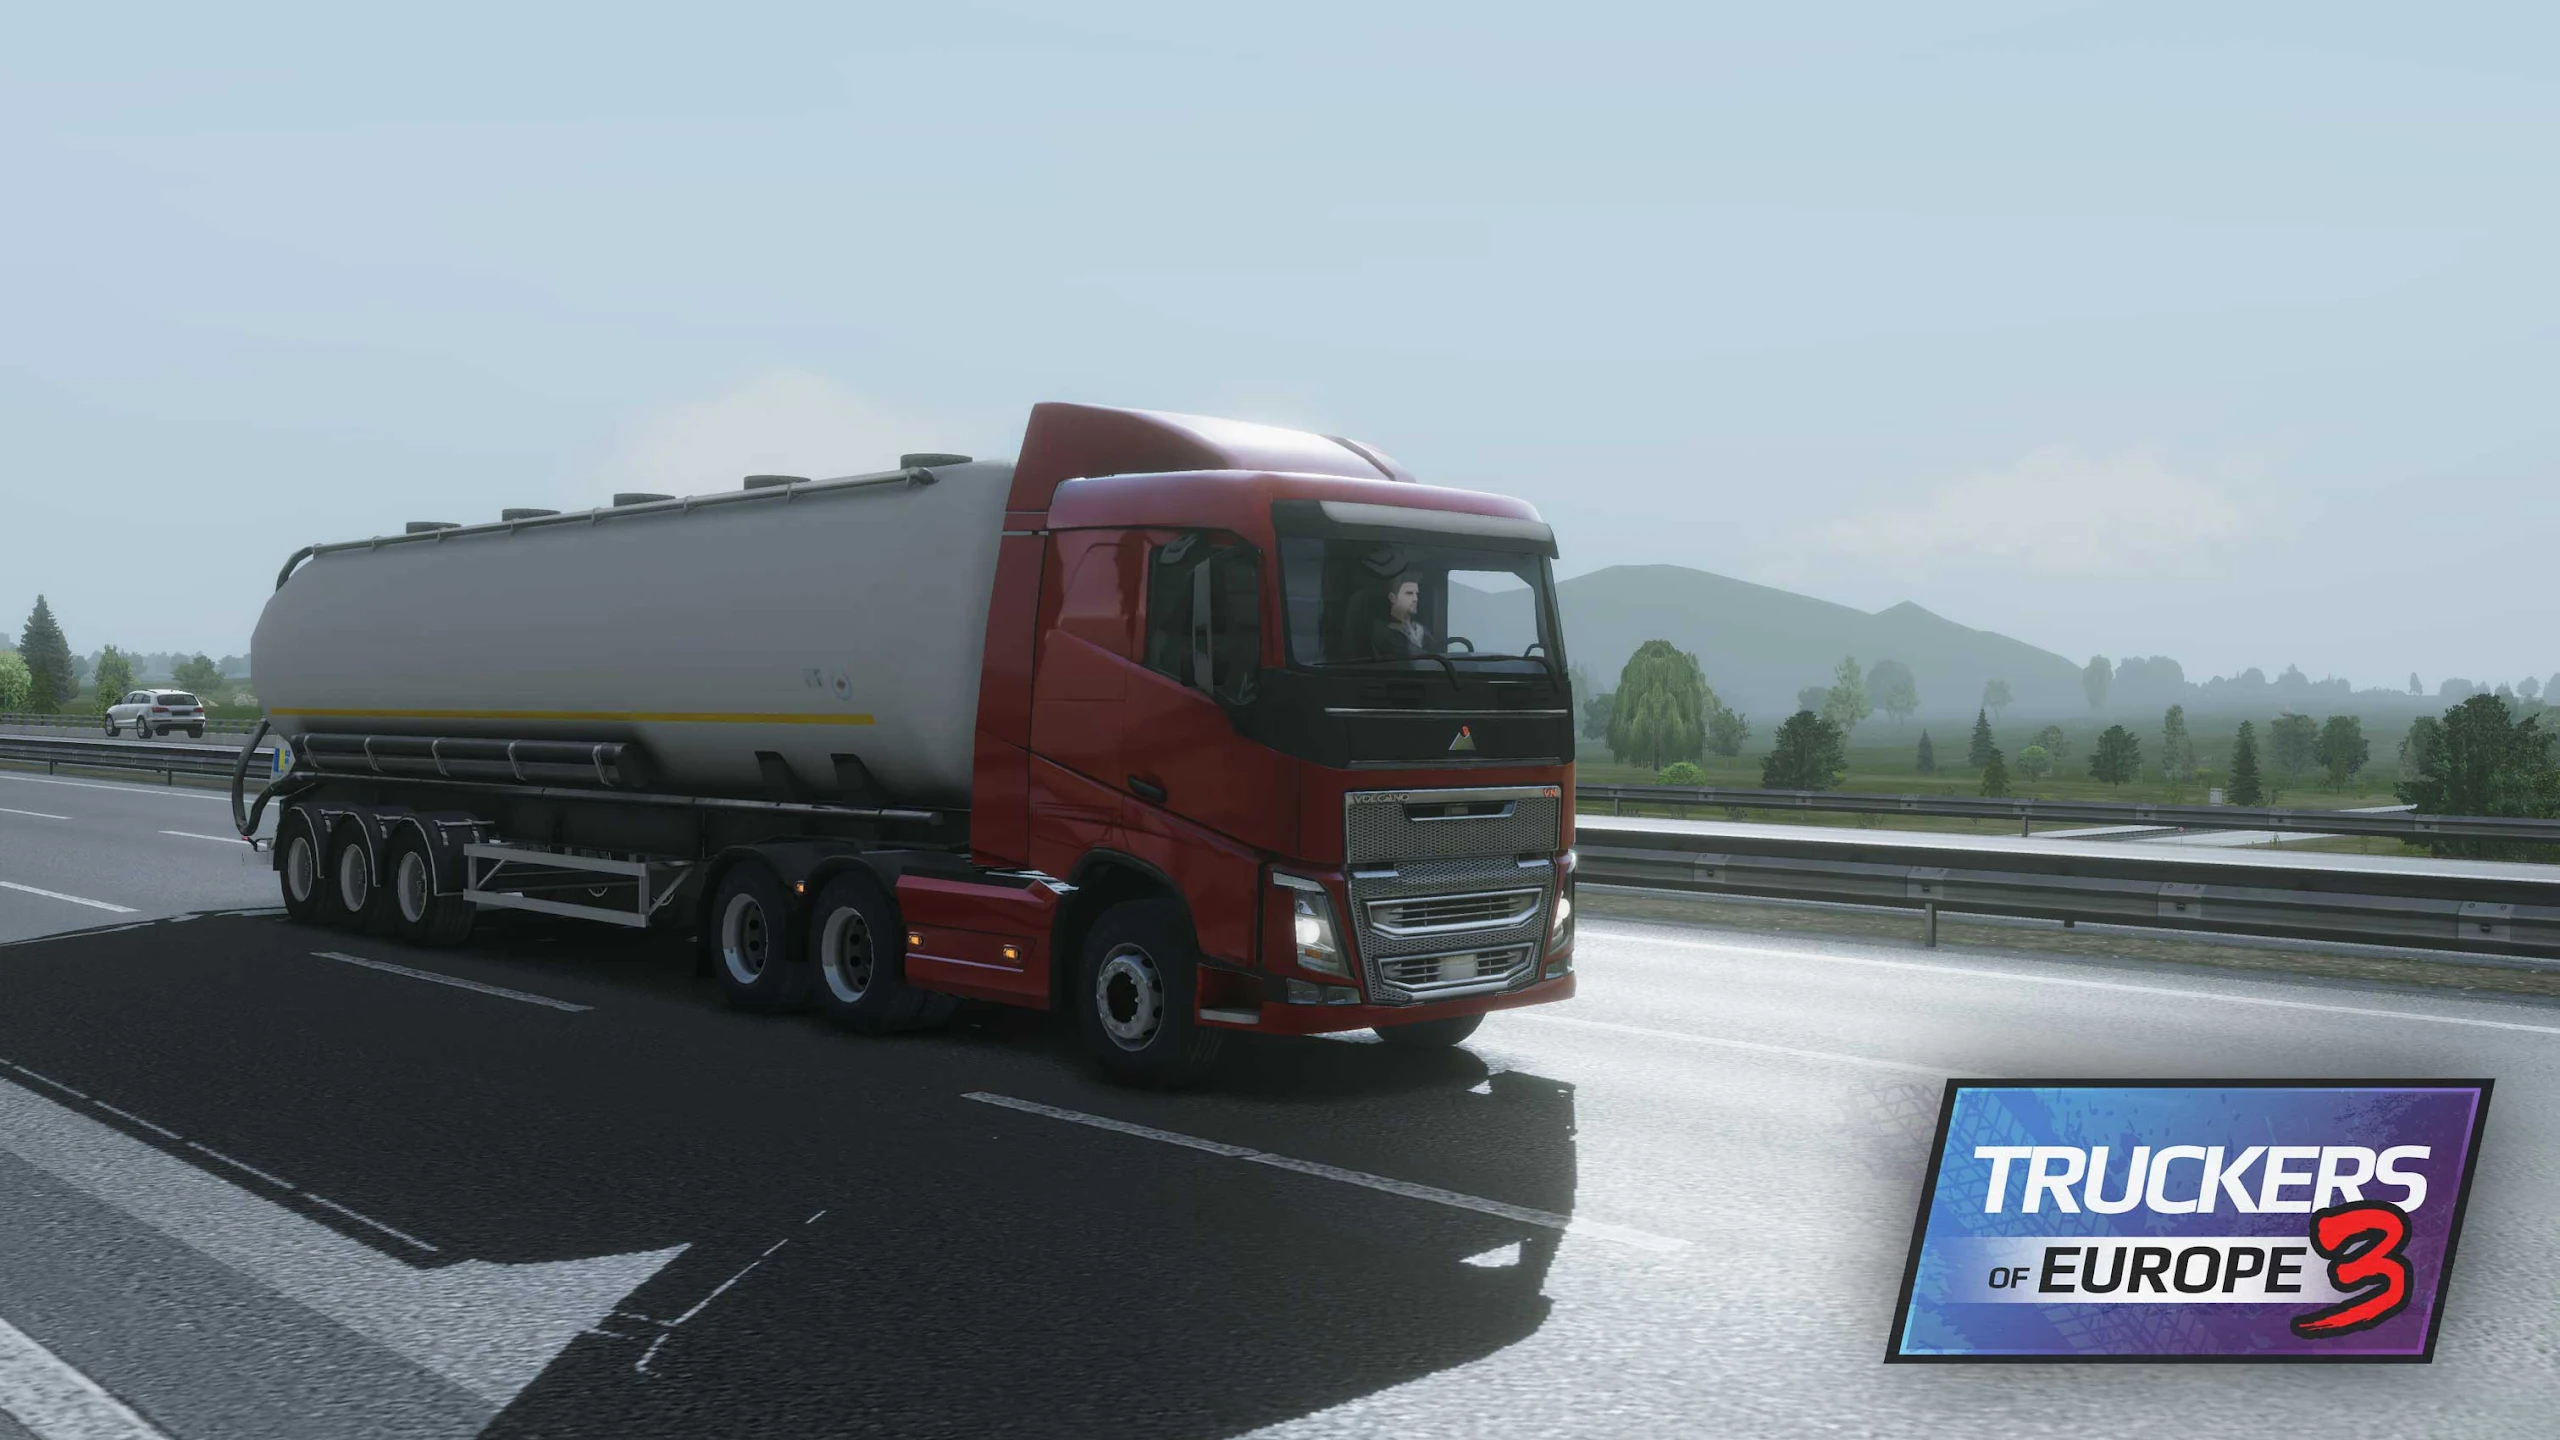 Akhirnya Release Juga - Truckers of Europe 3 by WANDA Software